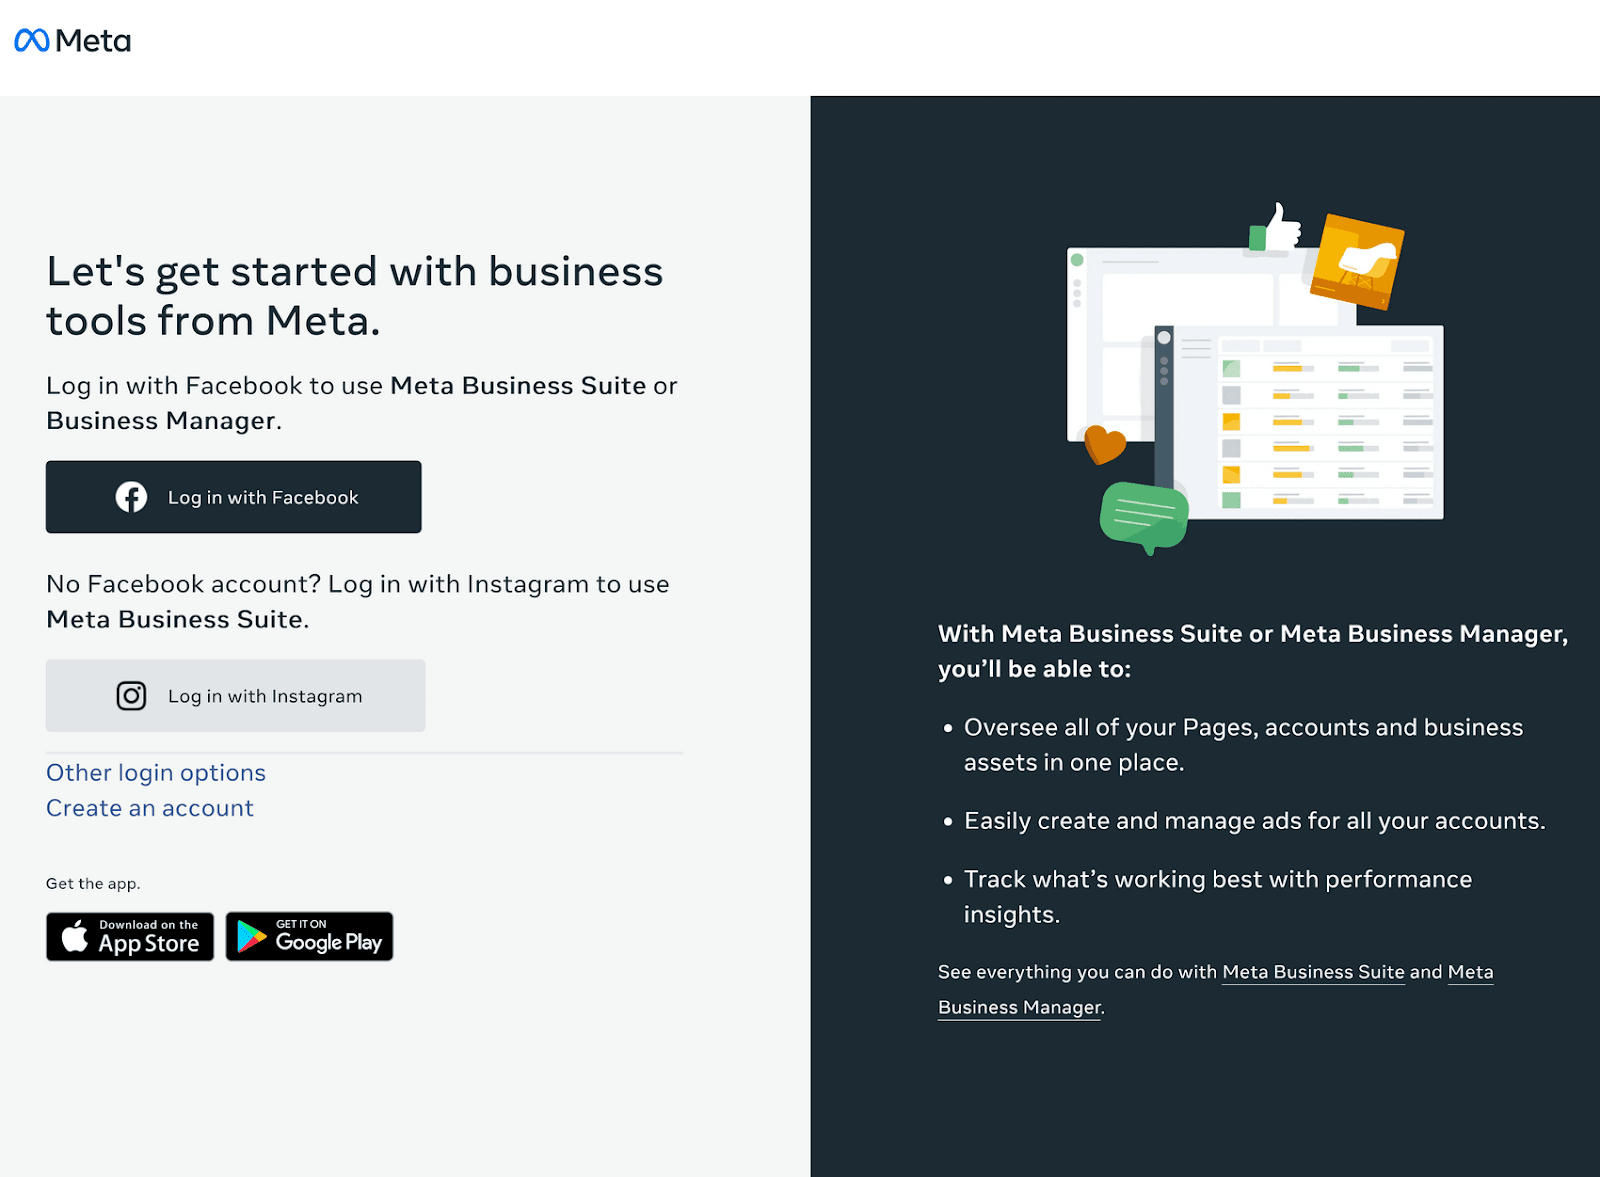 Meta Business Manager landing page